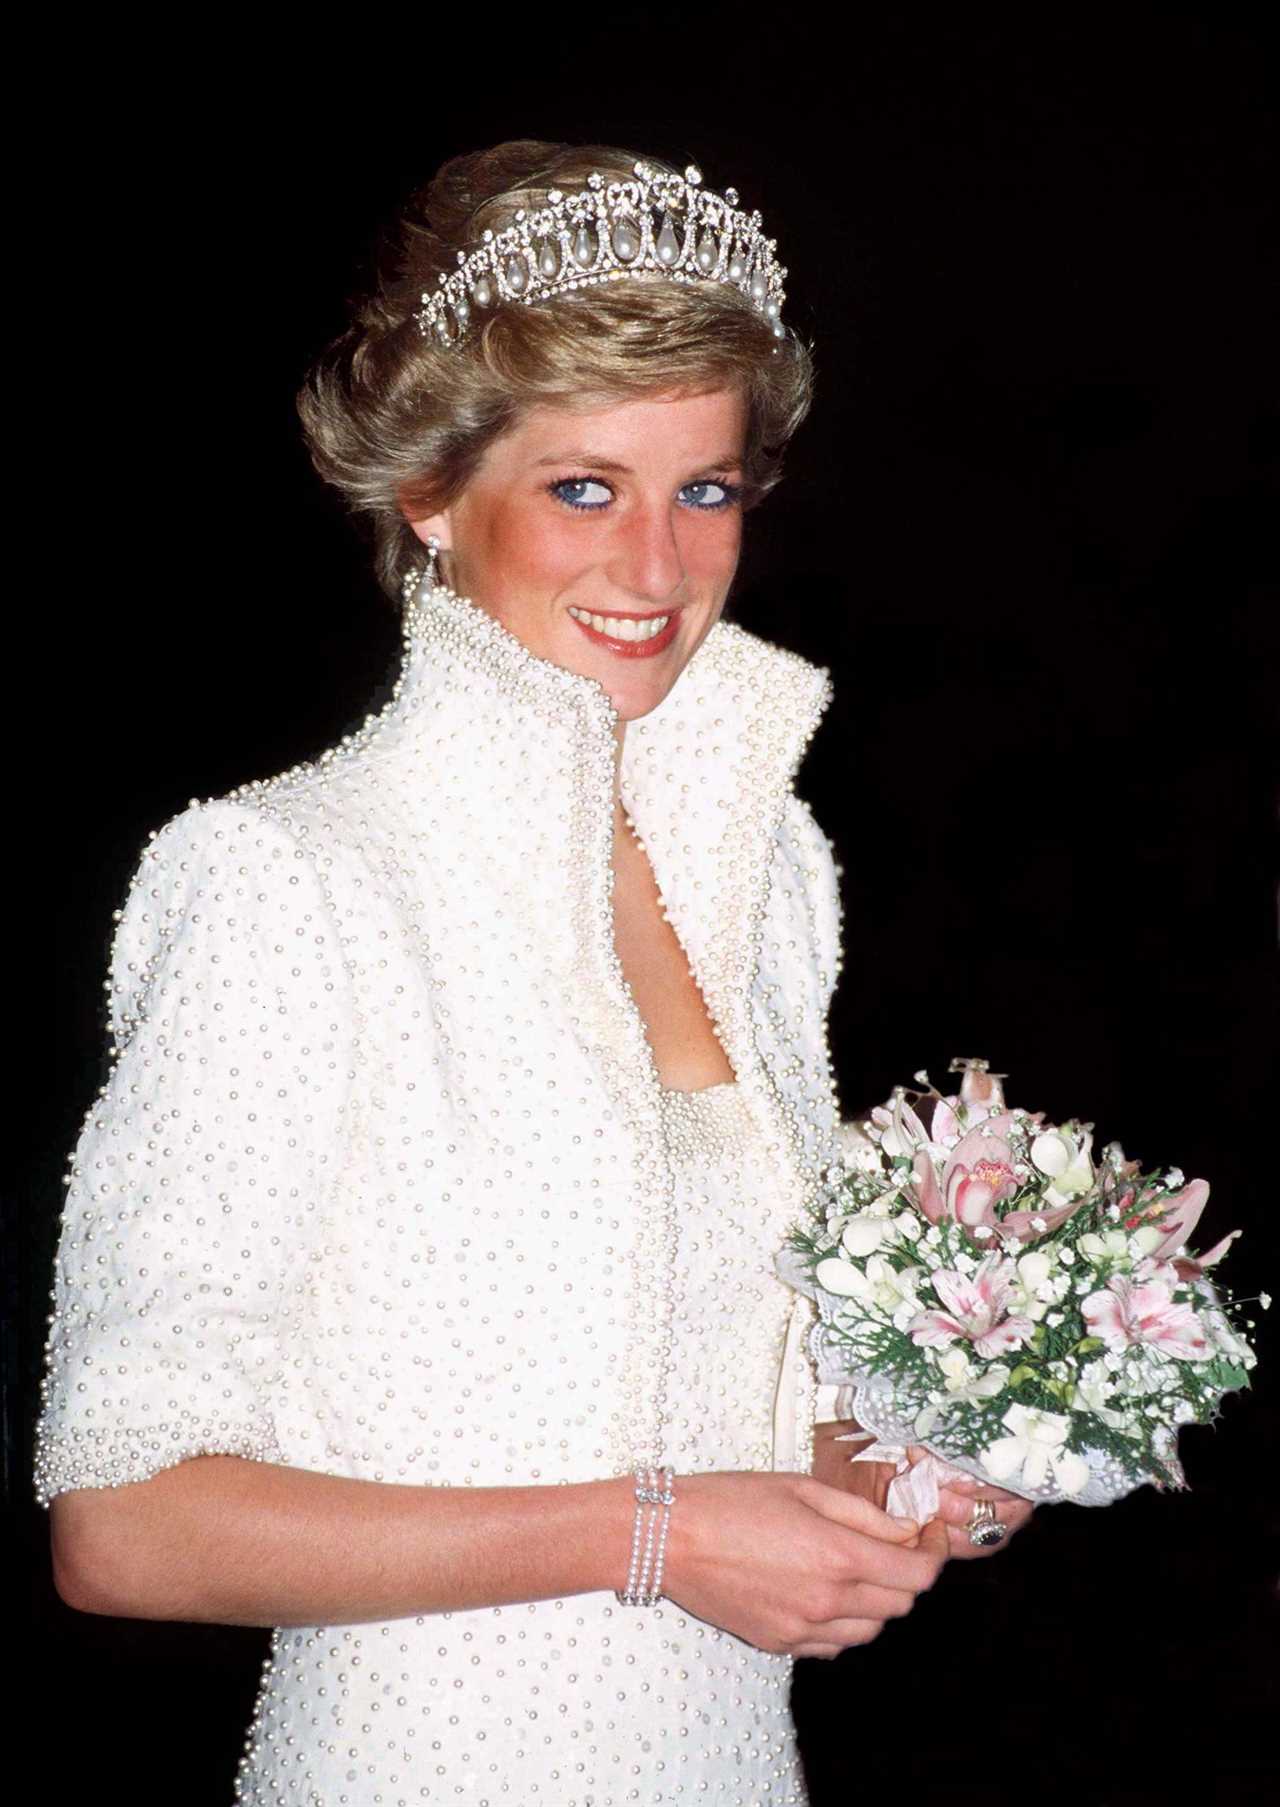 The stunning piece of jewellery once belonged to Princess Diana